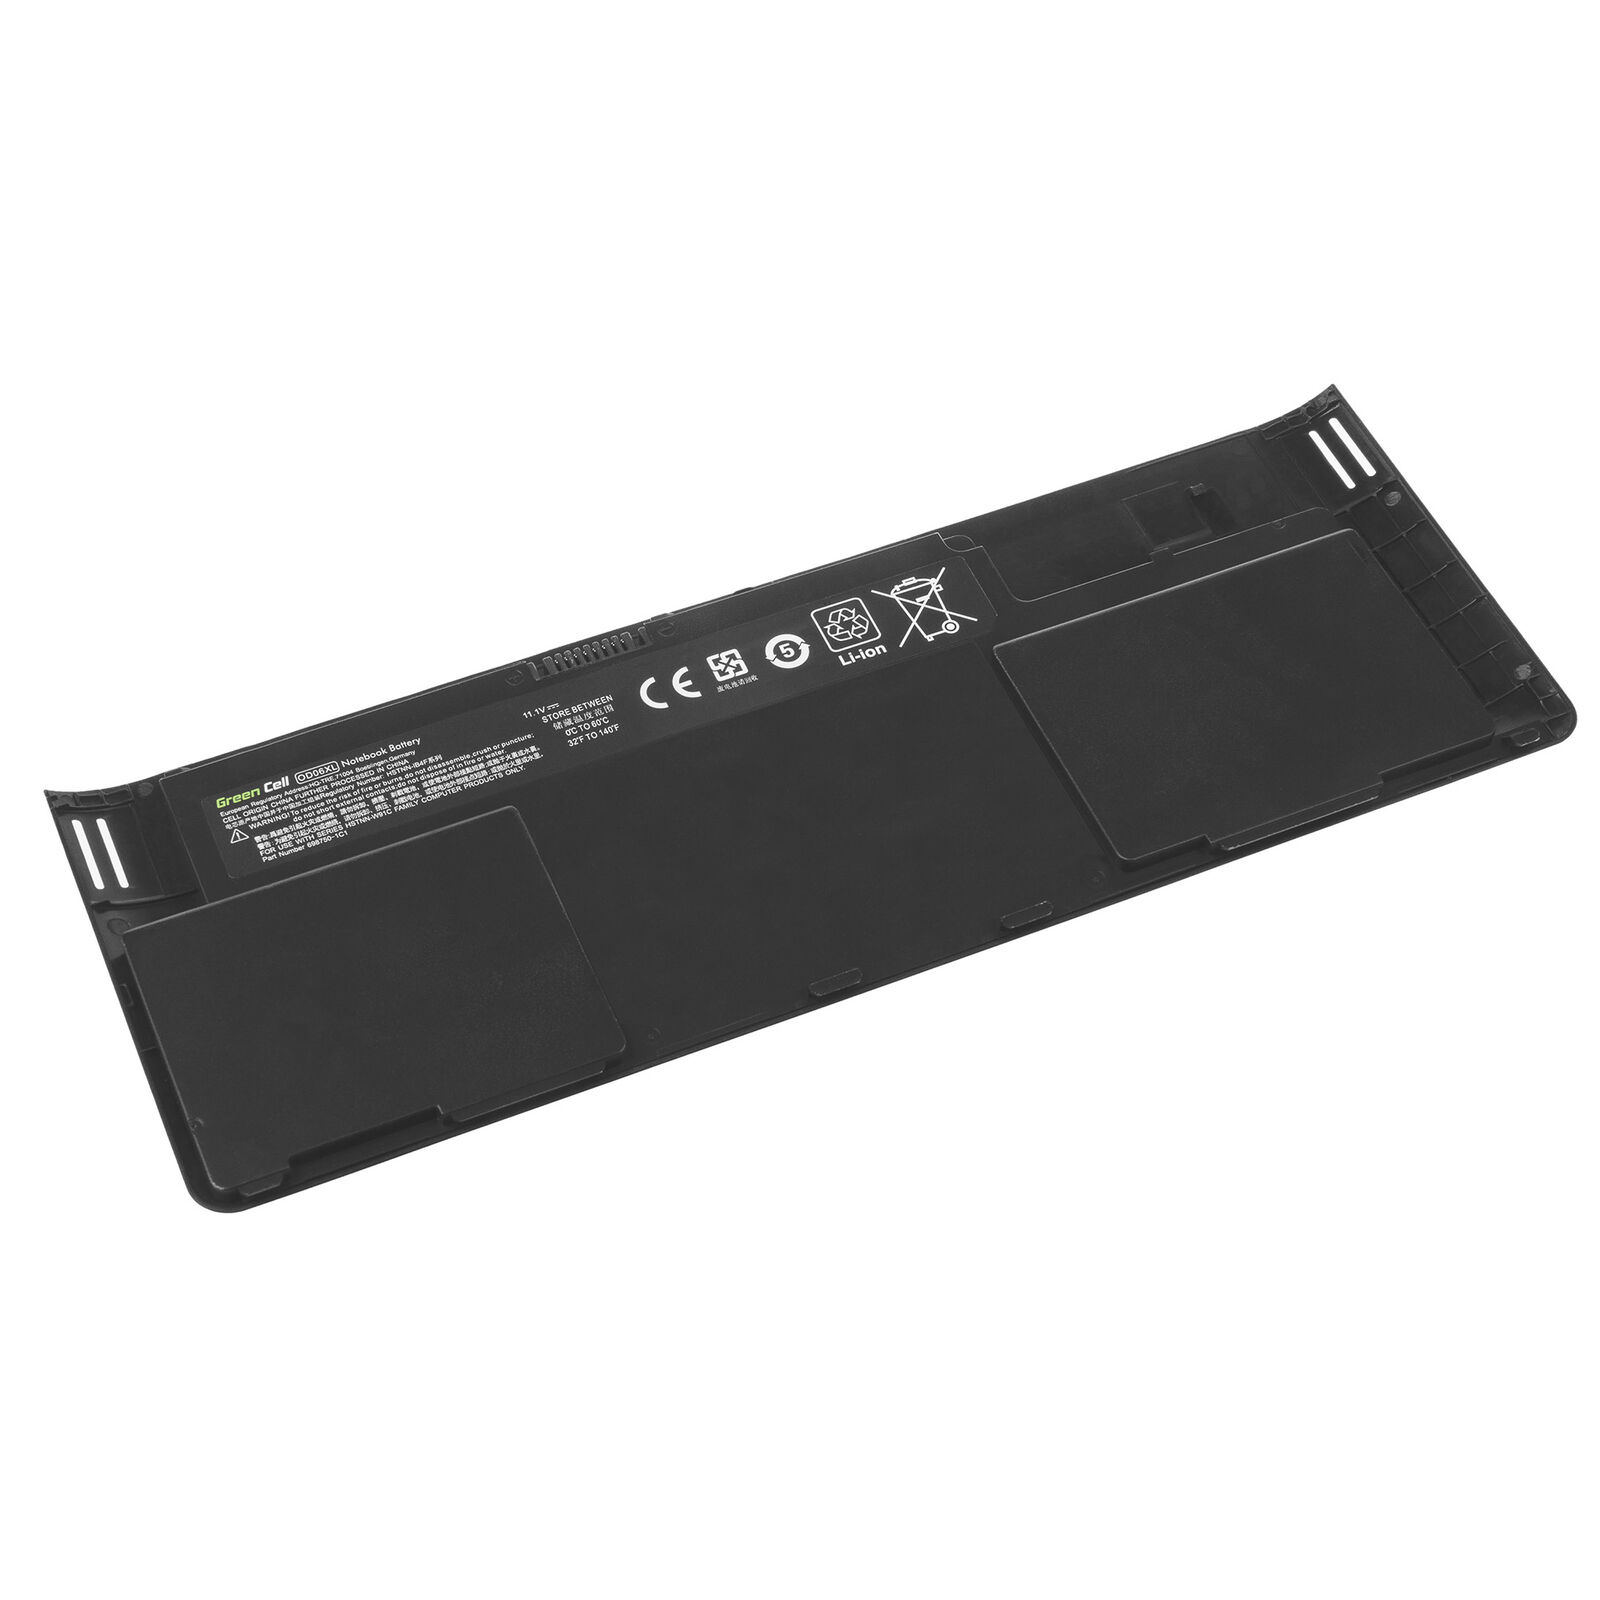 Batterie pour HP Revolve 810, Tablet PC, H6L25AA, OD06XL HSTNN-IB4F(compatible)